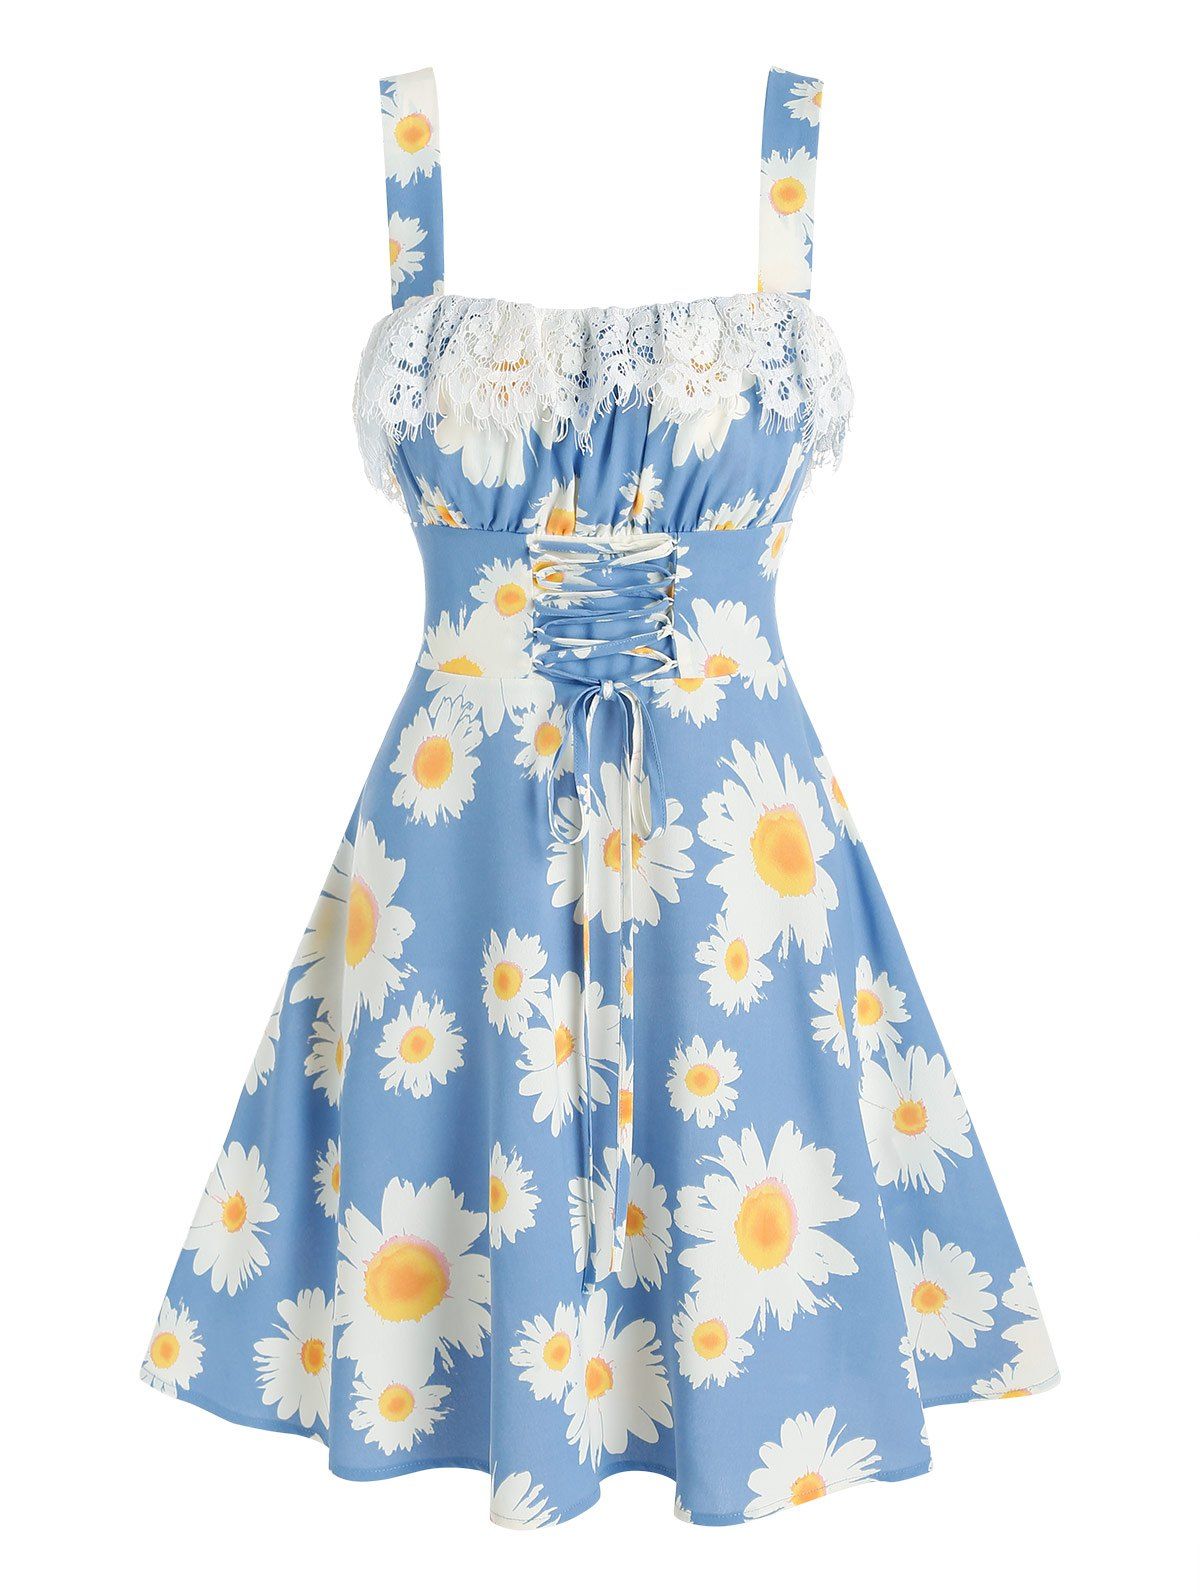 Vacation A Line Mini Sundress Sunflower Print Lace Insert Lace Up Ruched Sleeveless Summer Dress - BLUE XL